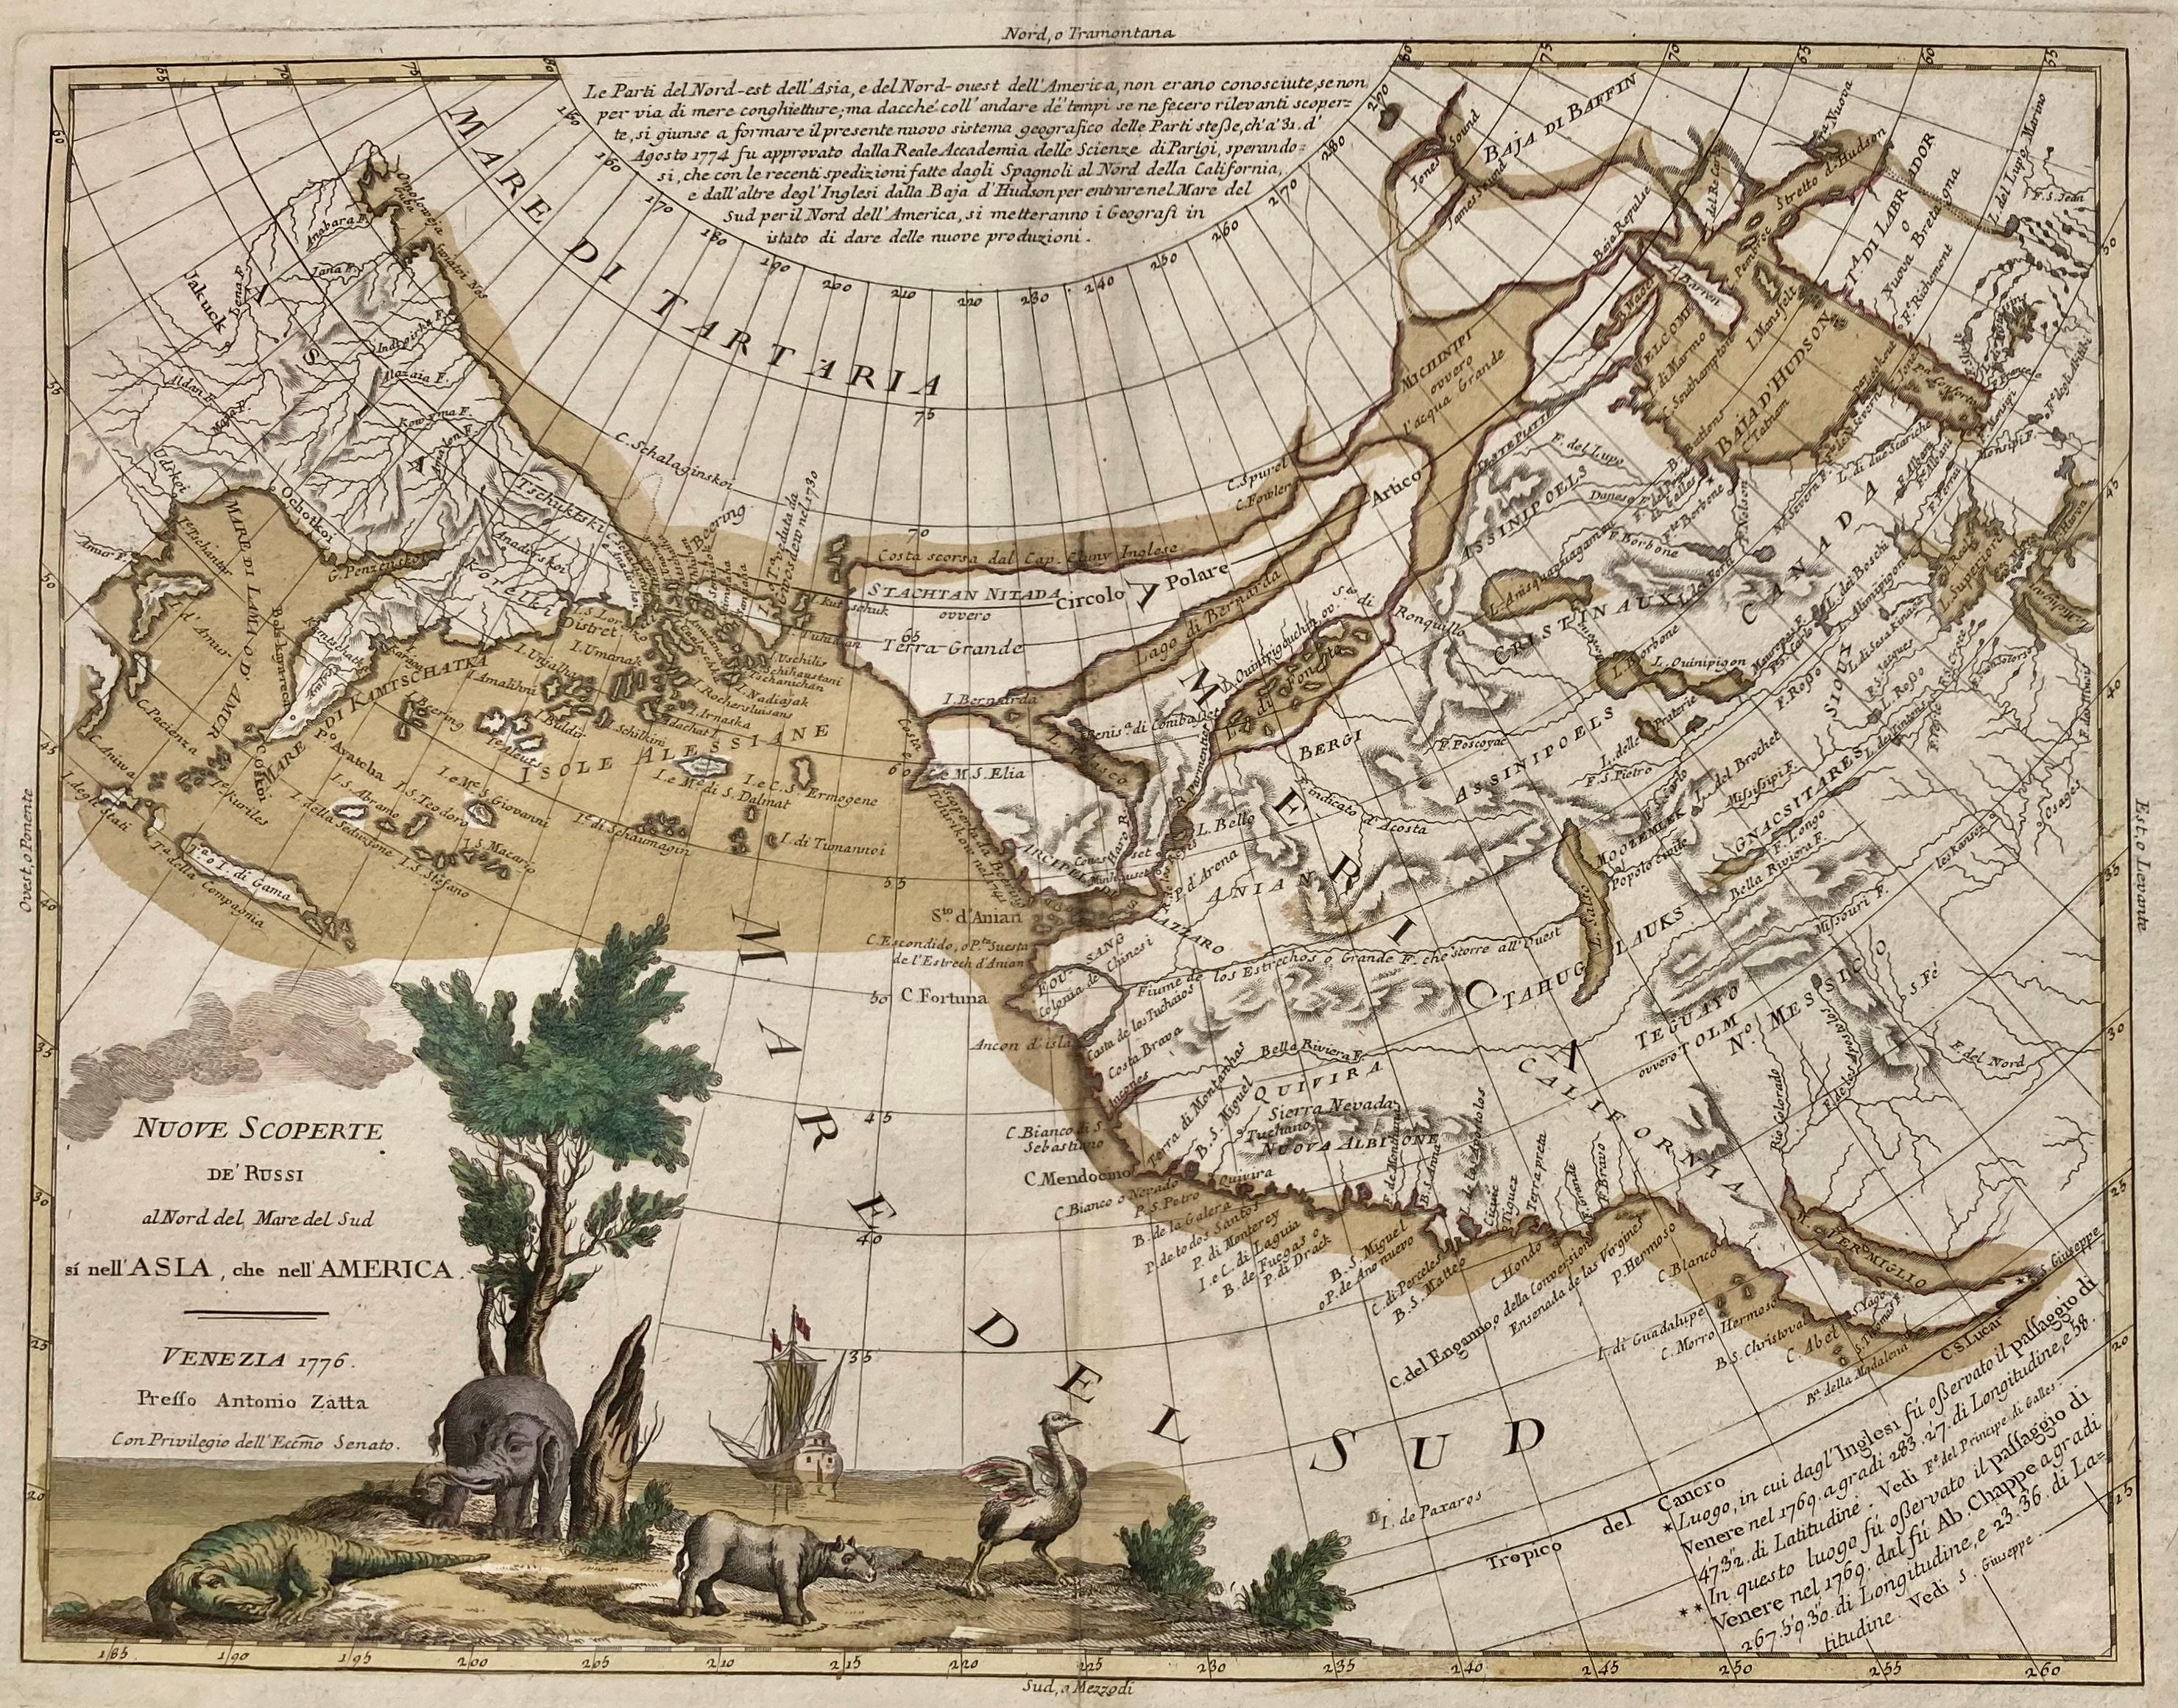 IMPORTANT MAP OF THE N.W. PASSAGE, CALIFORNIA, ASIA - Am. Revolutionary War Time - Gray Landscape Print by Antonio Zatta